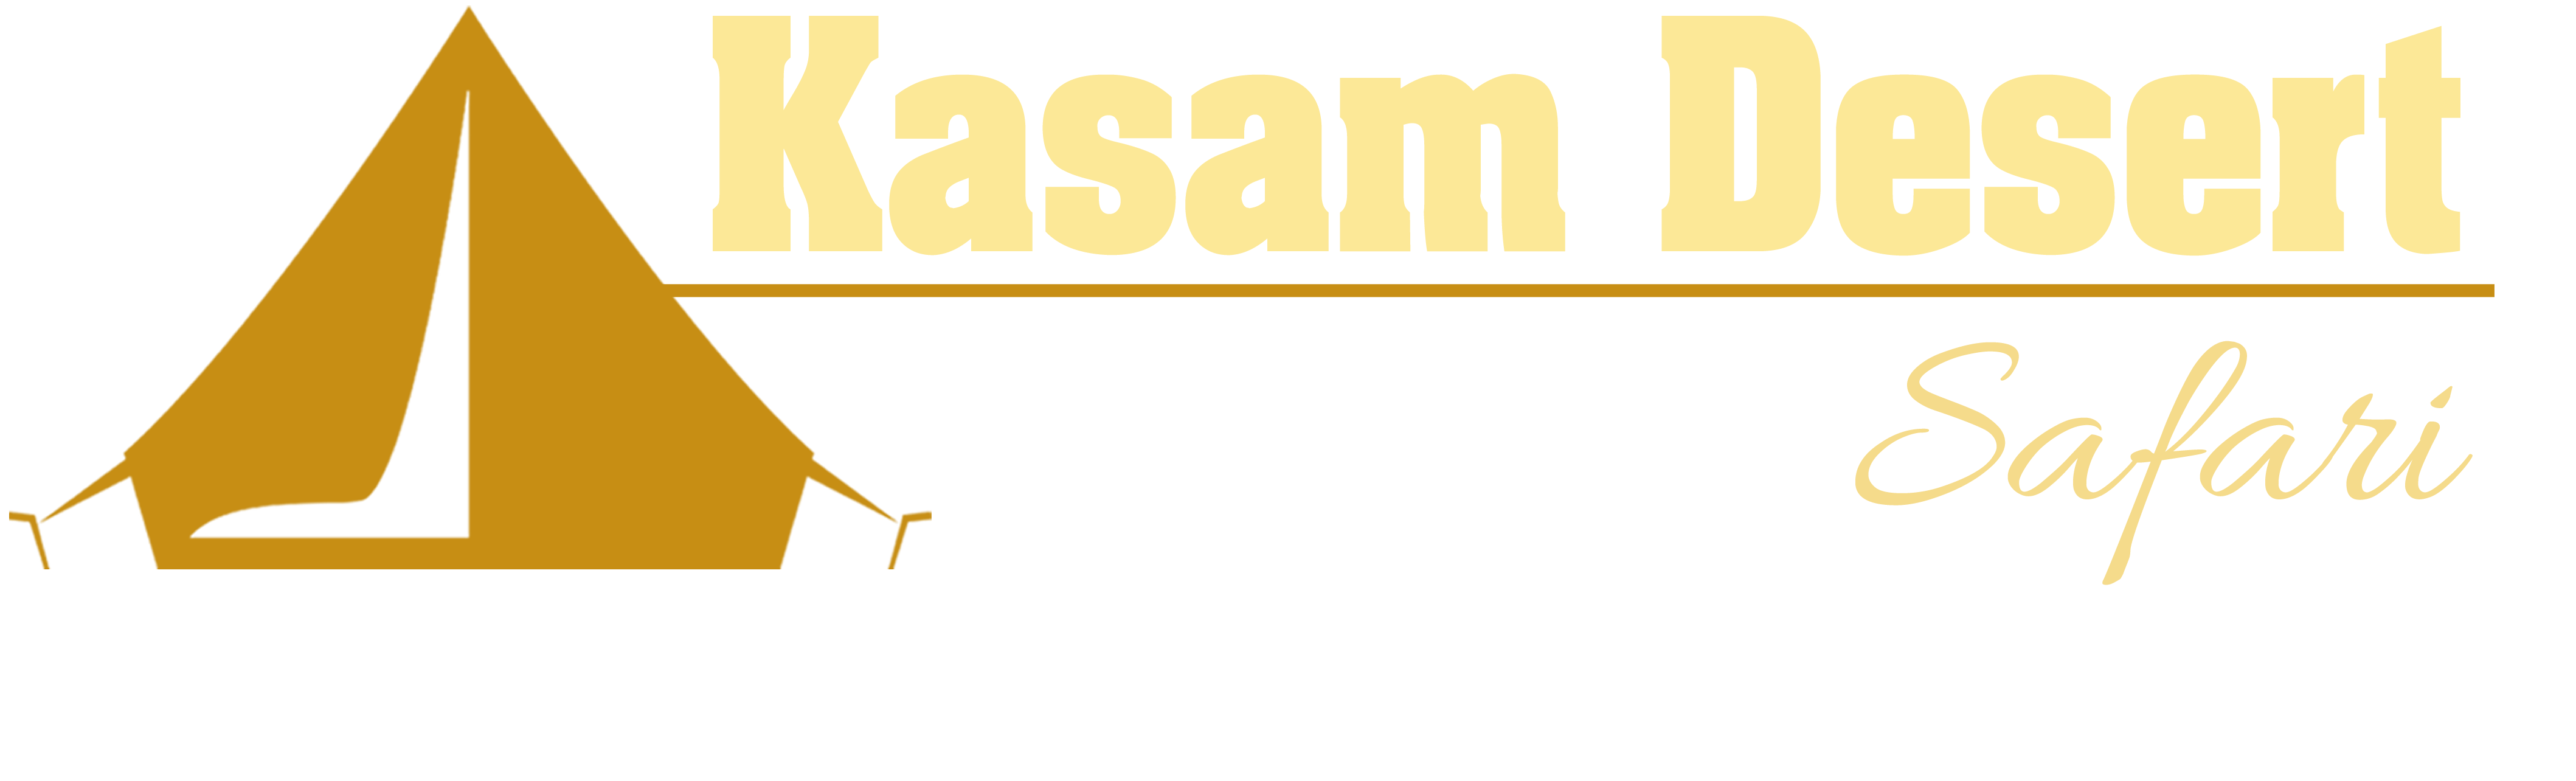 Kasam Desert Safari Camp